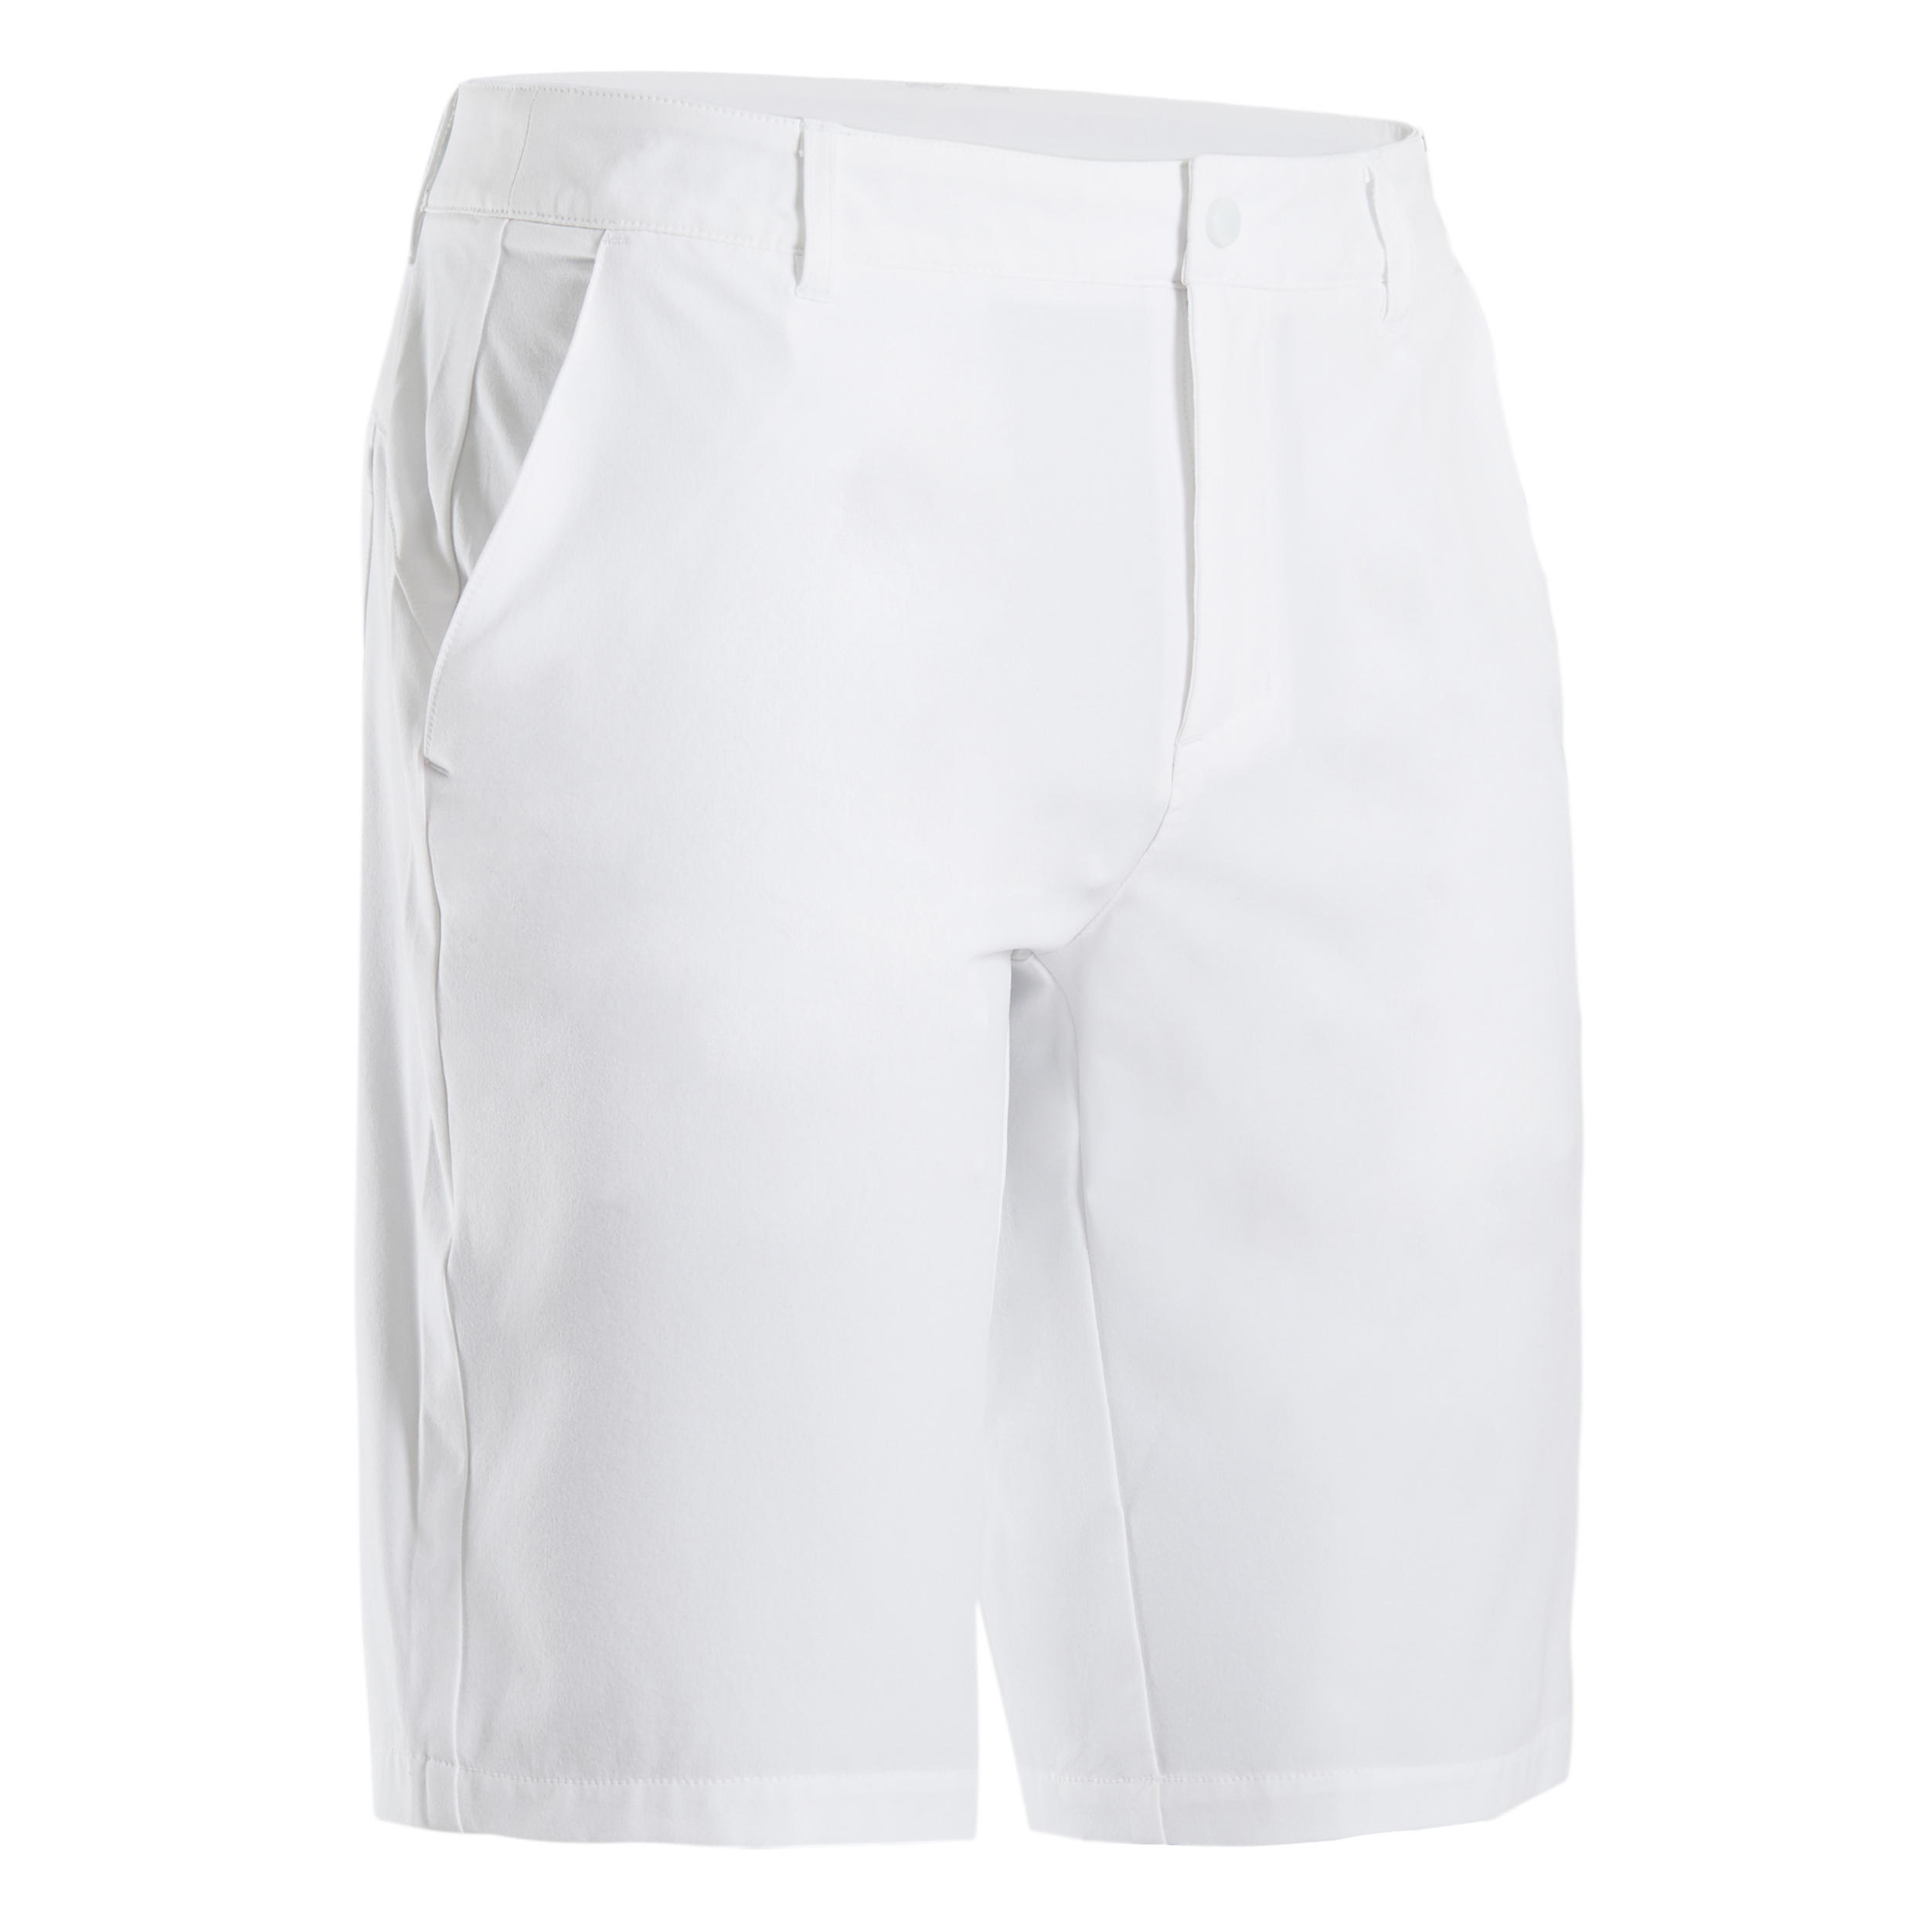 decathlon golf shorts